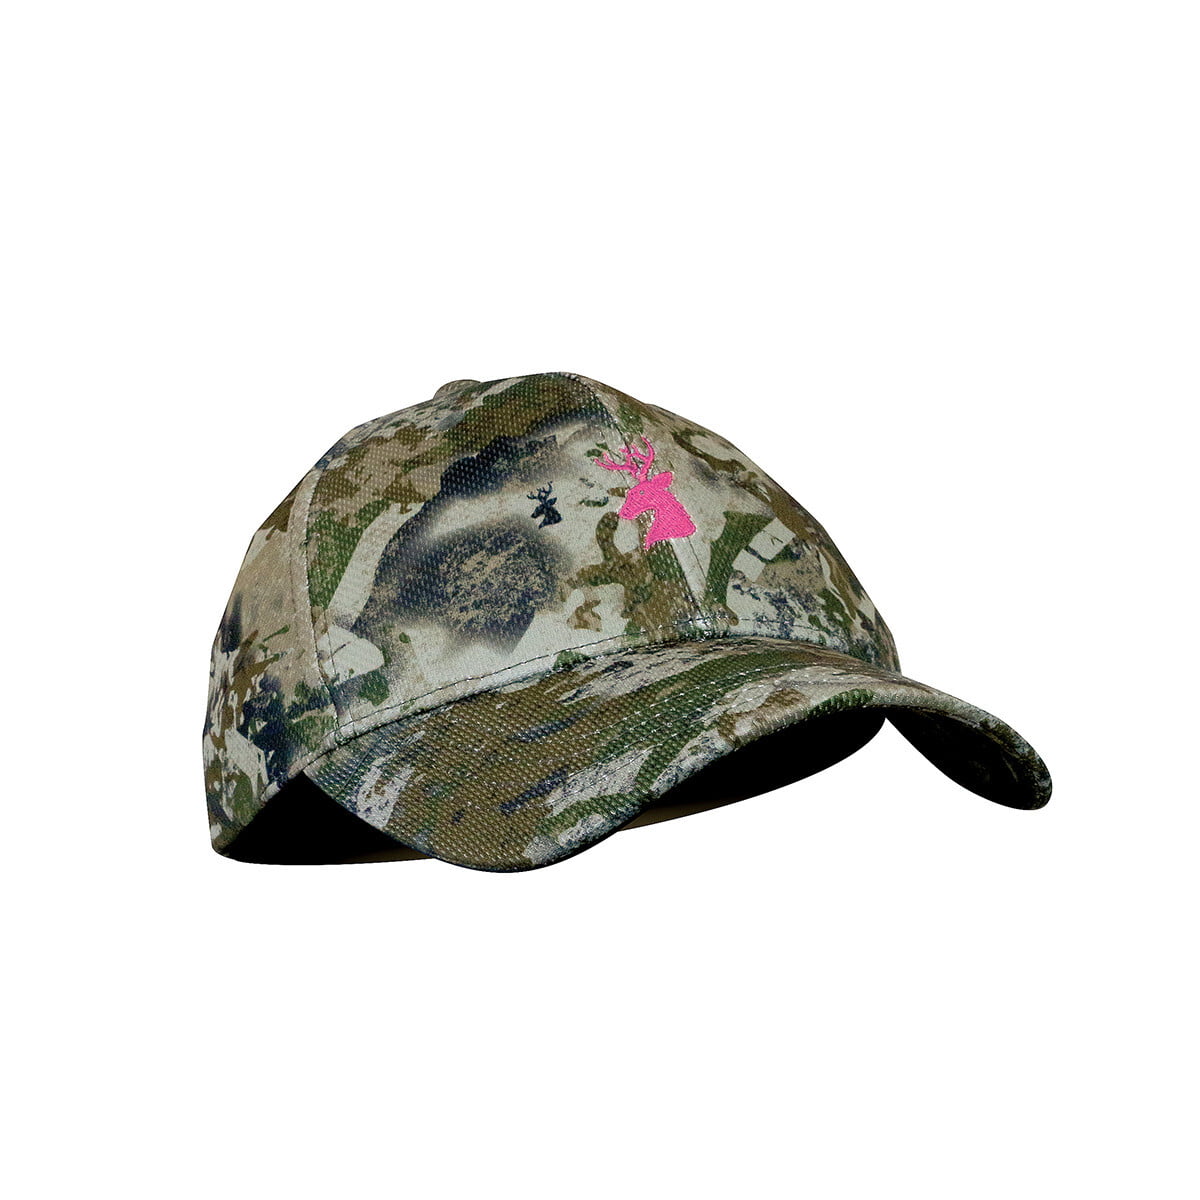 Spika Adult Ranger Cap - Pink